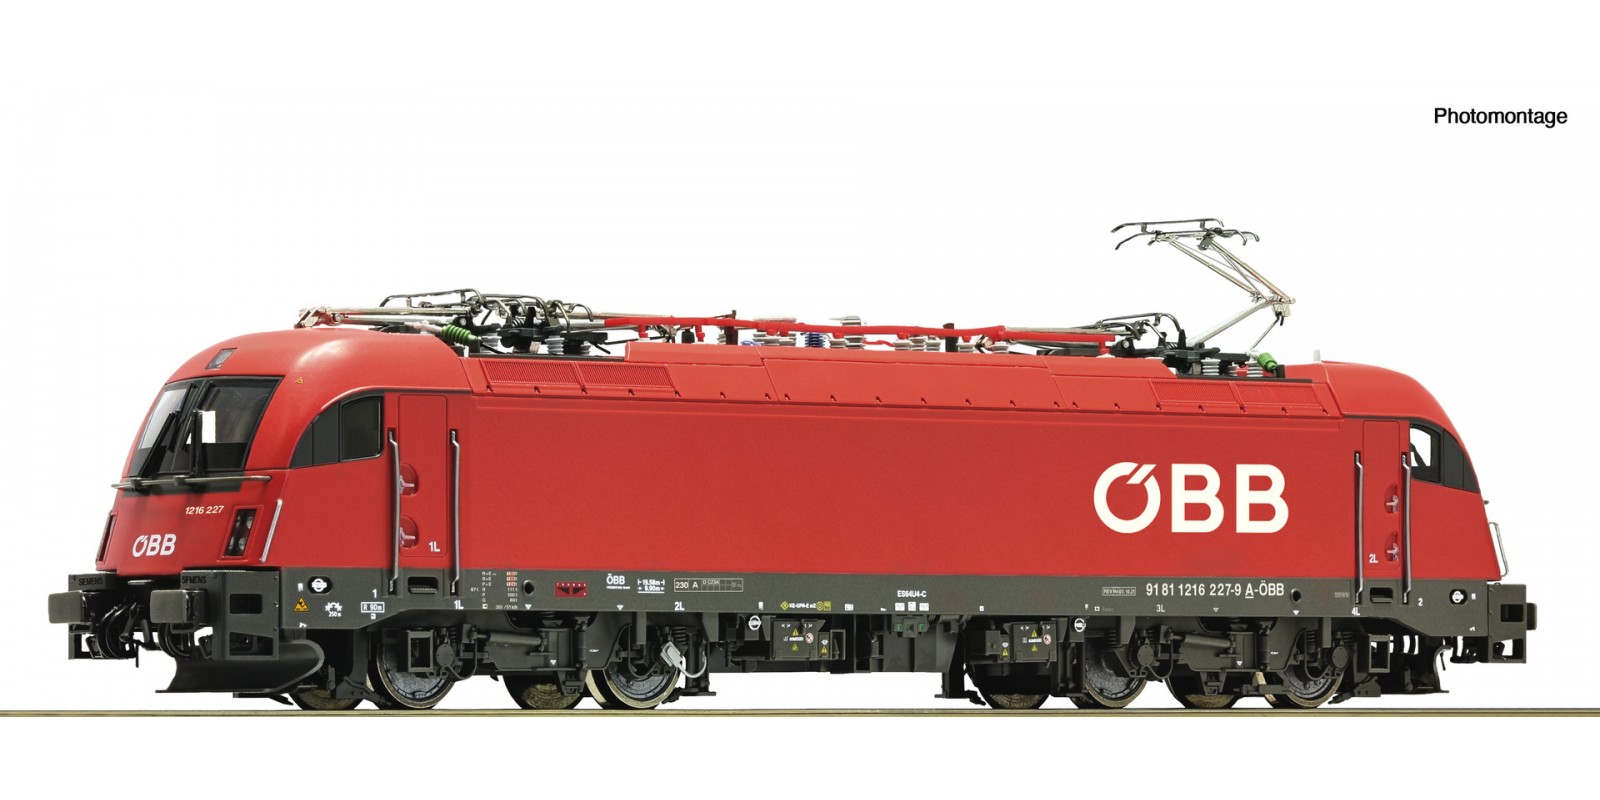 RO7520032 Electric locomotive 1216  227-9 ÖBB                